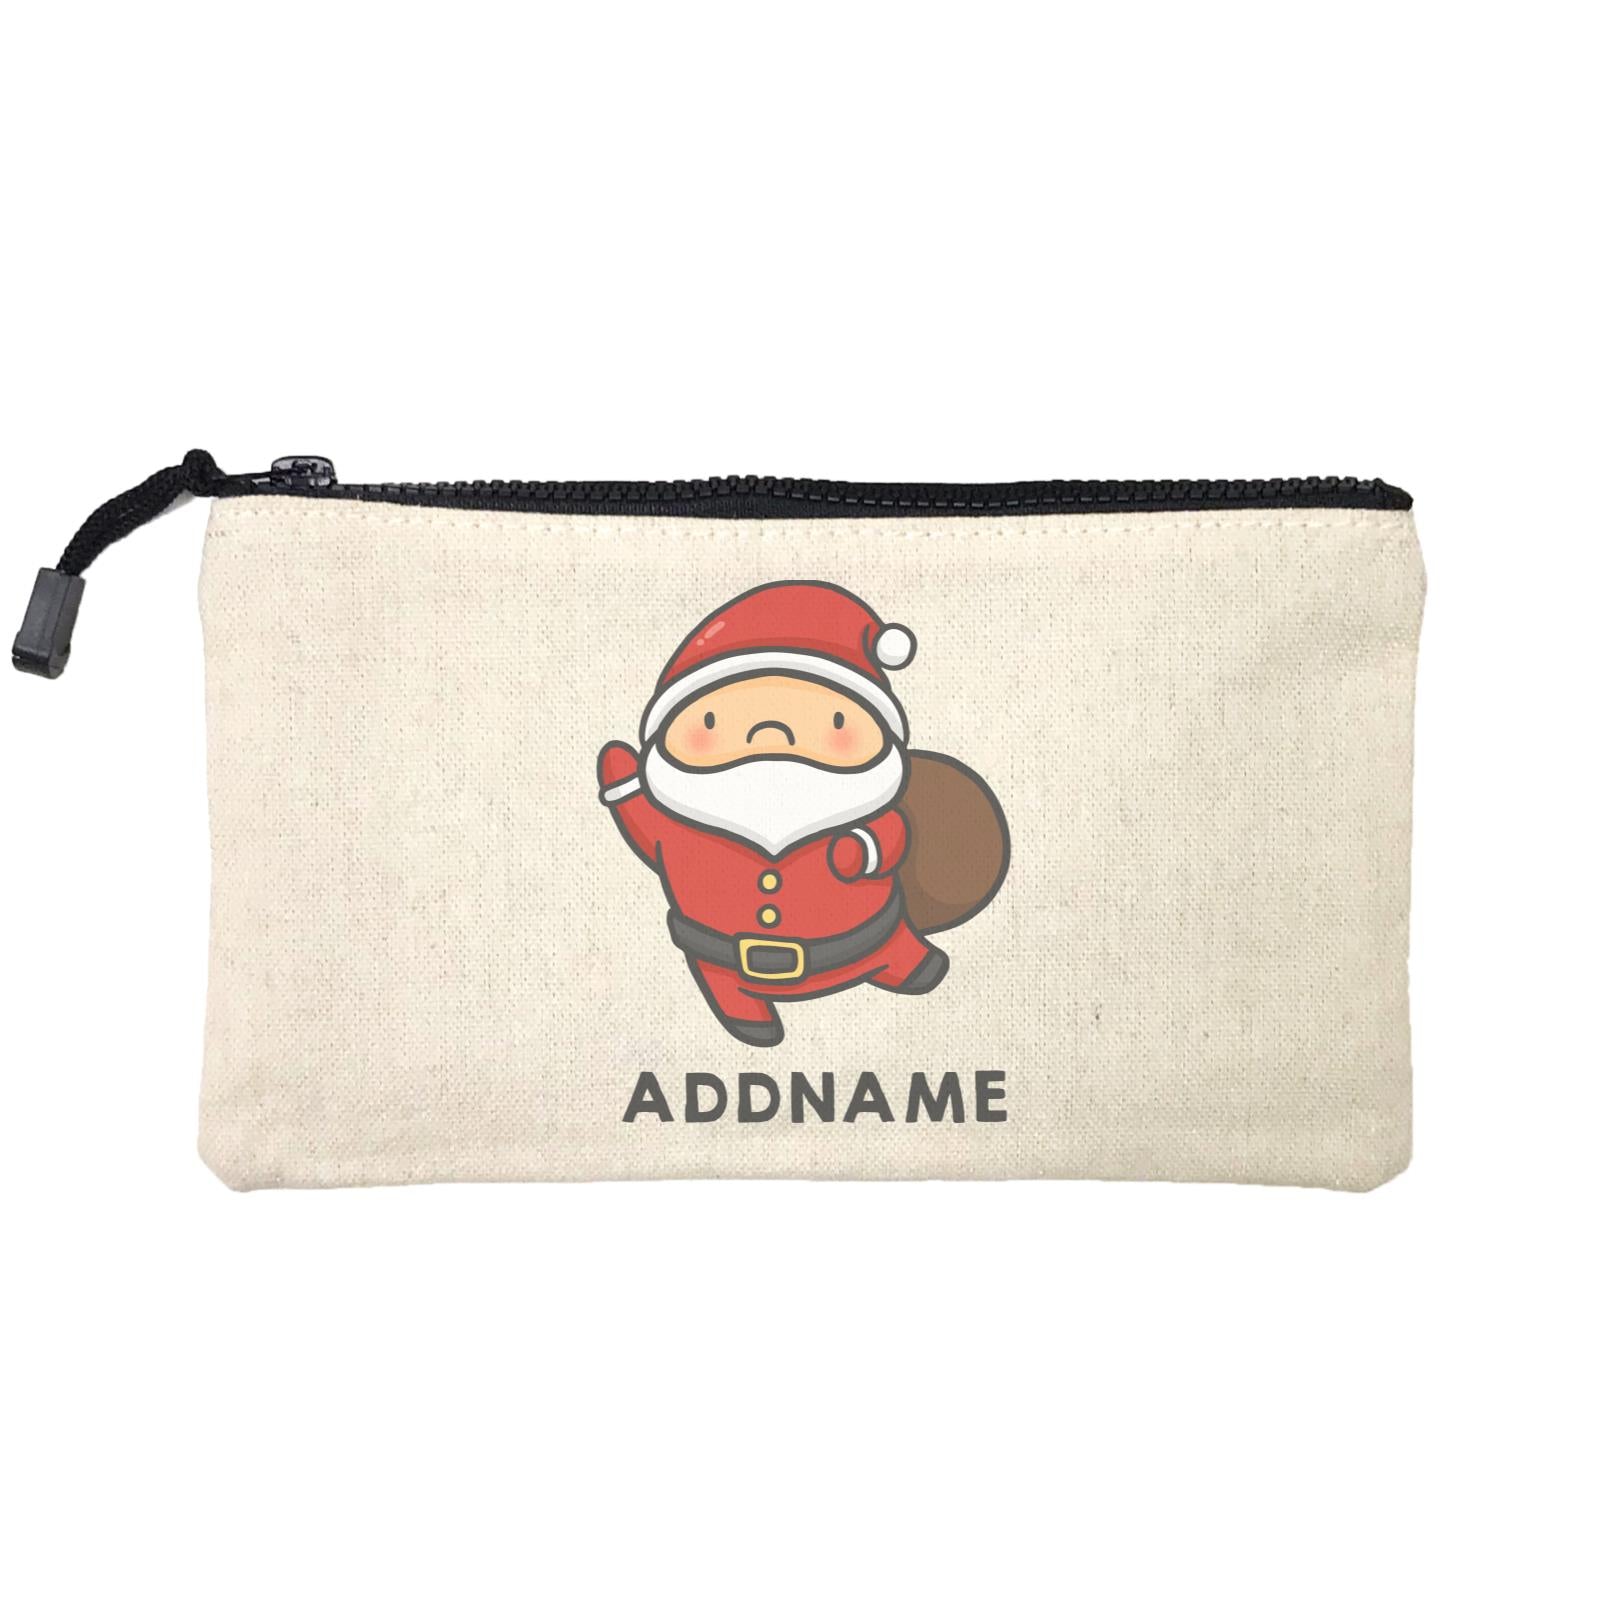 Xmas Cute Santa Claus Addname Mini Accessories Stationery Pouch